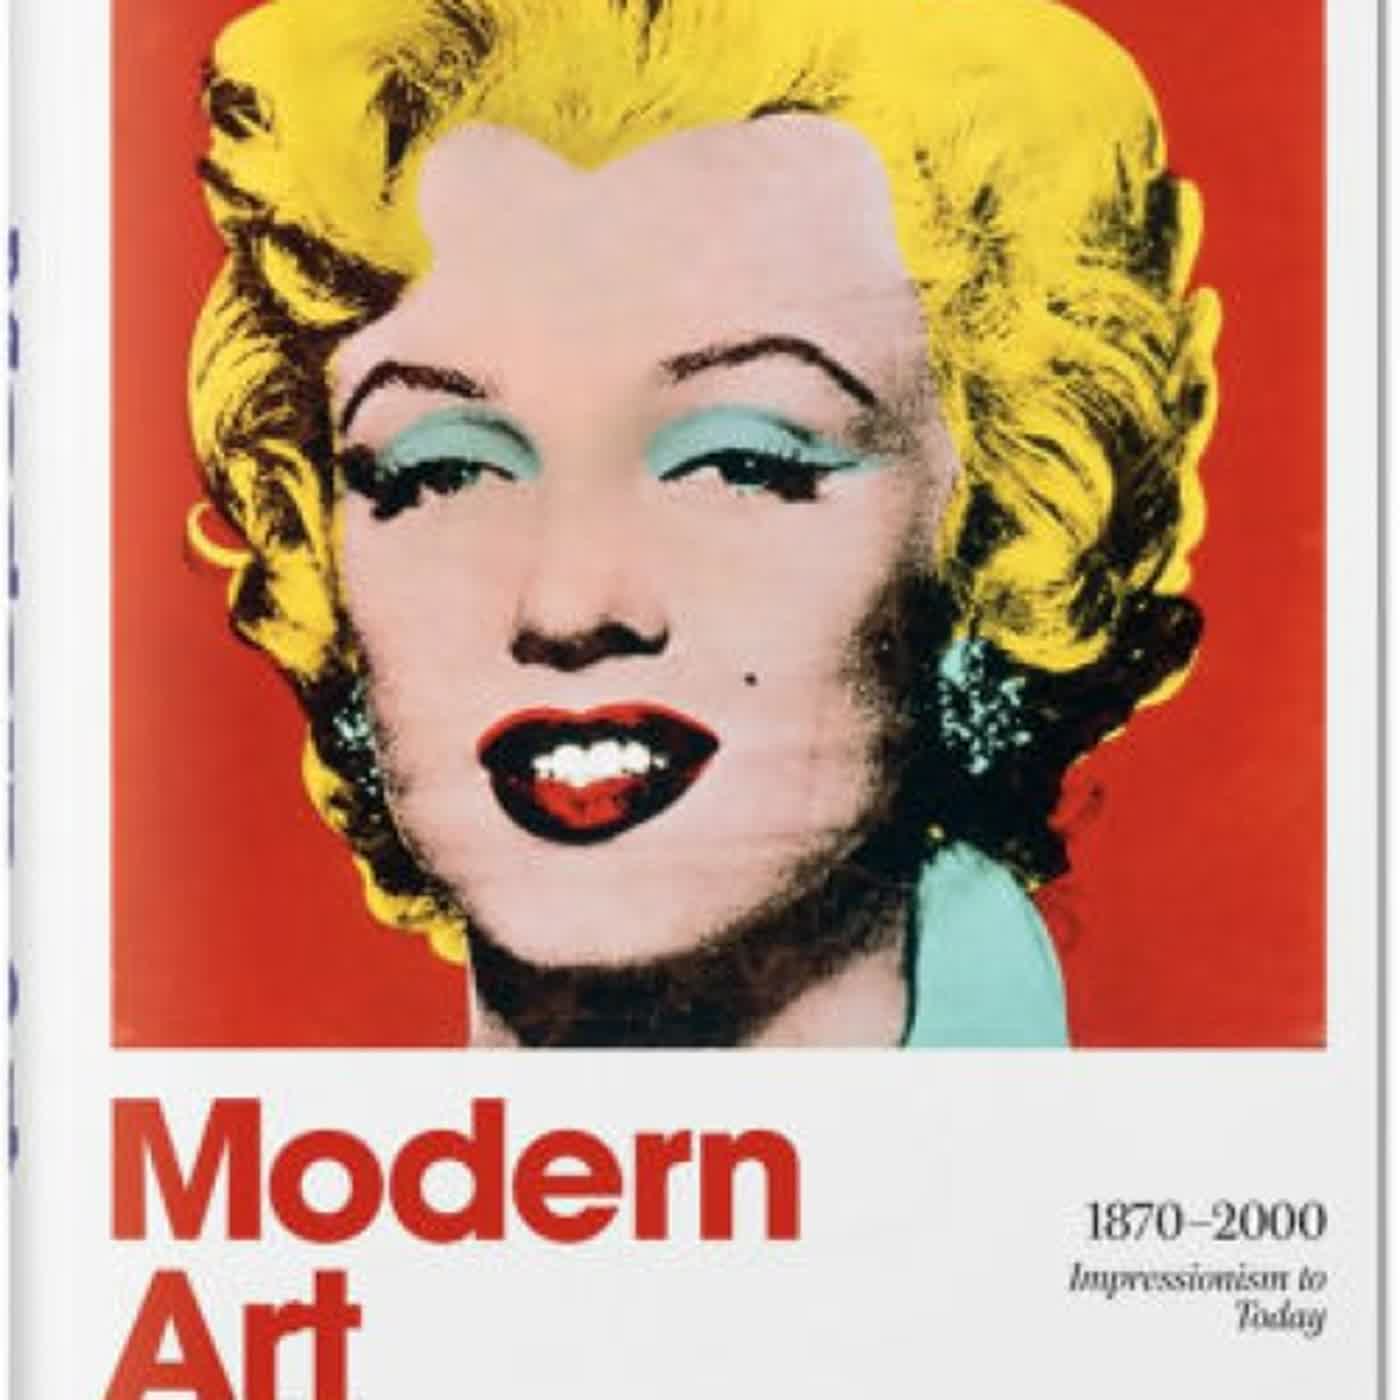 [Pdf/ePub] Modern Art 1870-2000: Impressionism to Today by Hans Werner Holzwarth download ebook